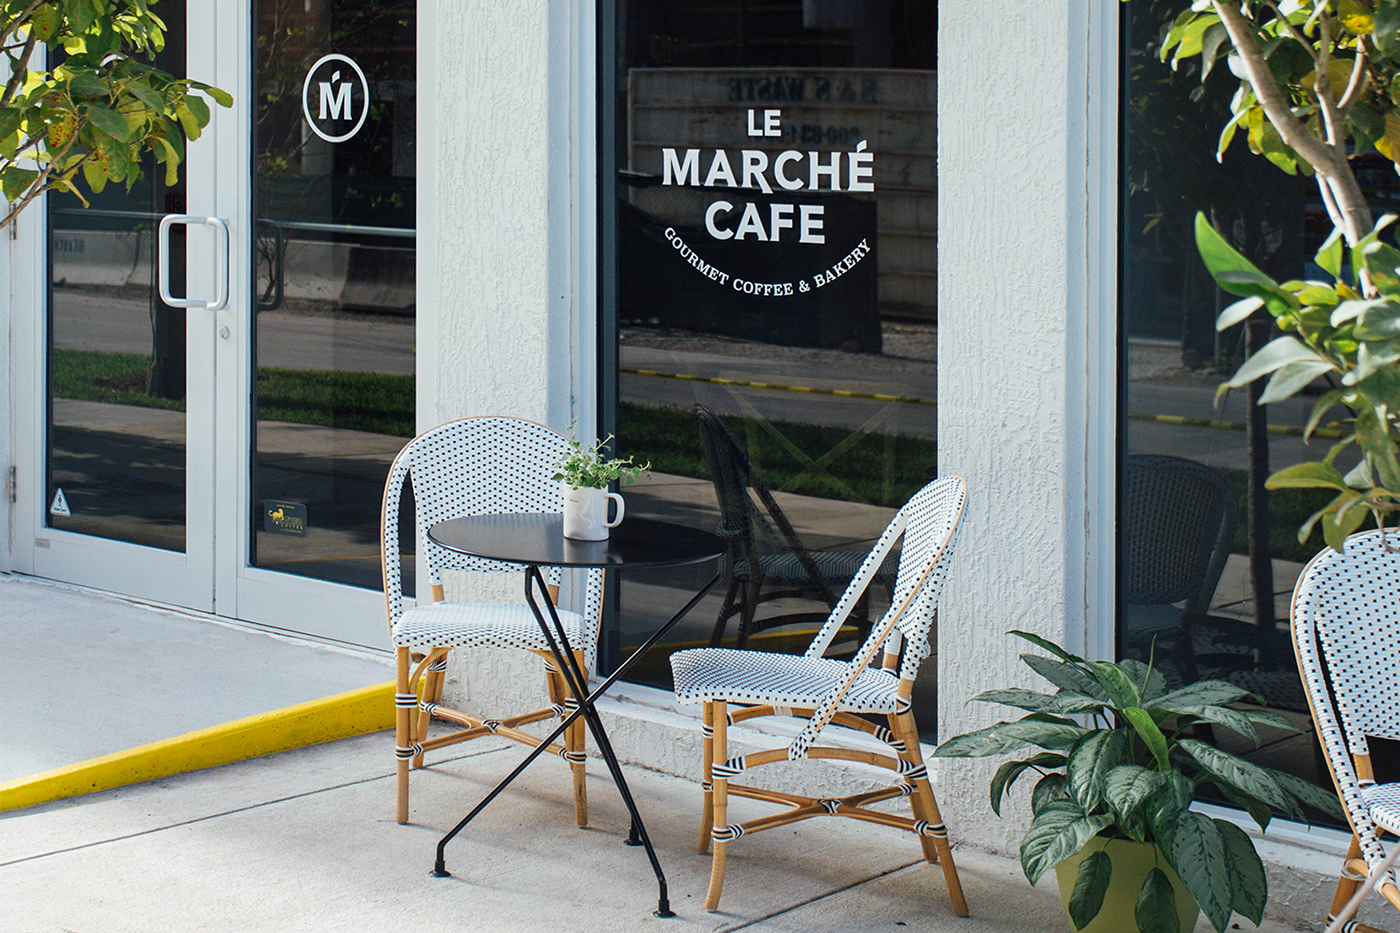 Le Marche Cafe cafe brand logo emblem monogram red print design jiani lu jiani Coffee beans miami rustic